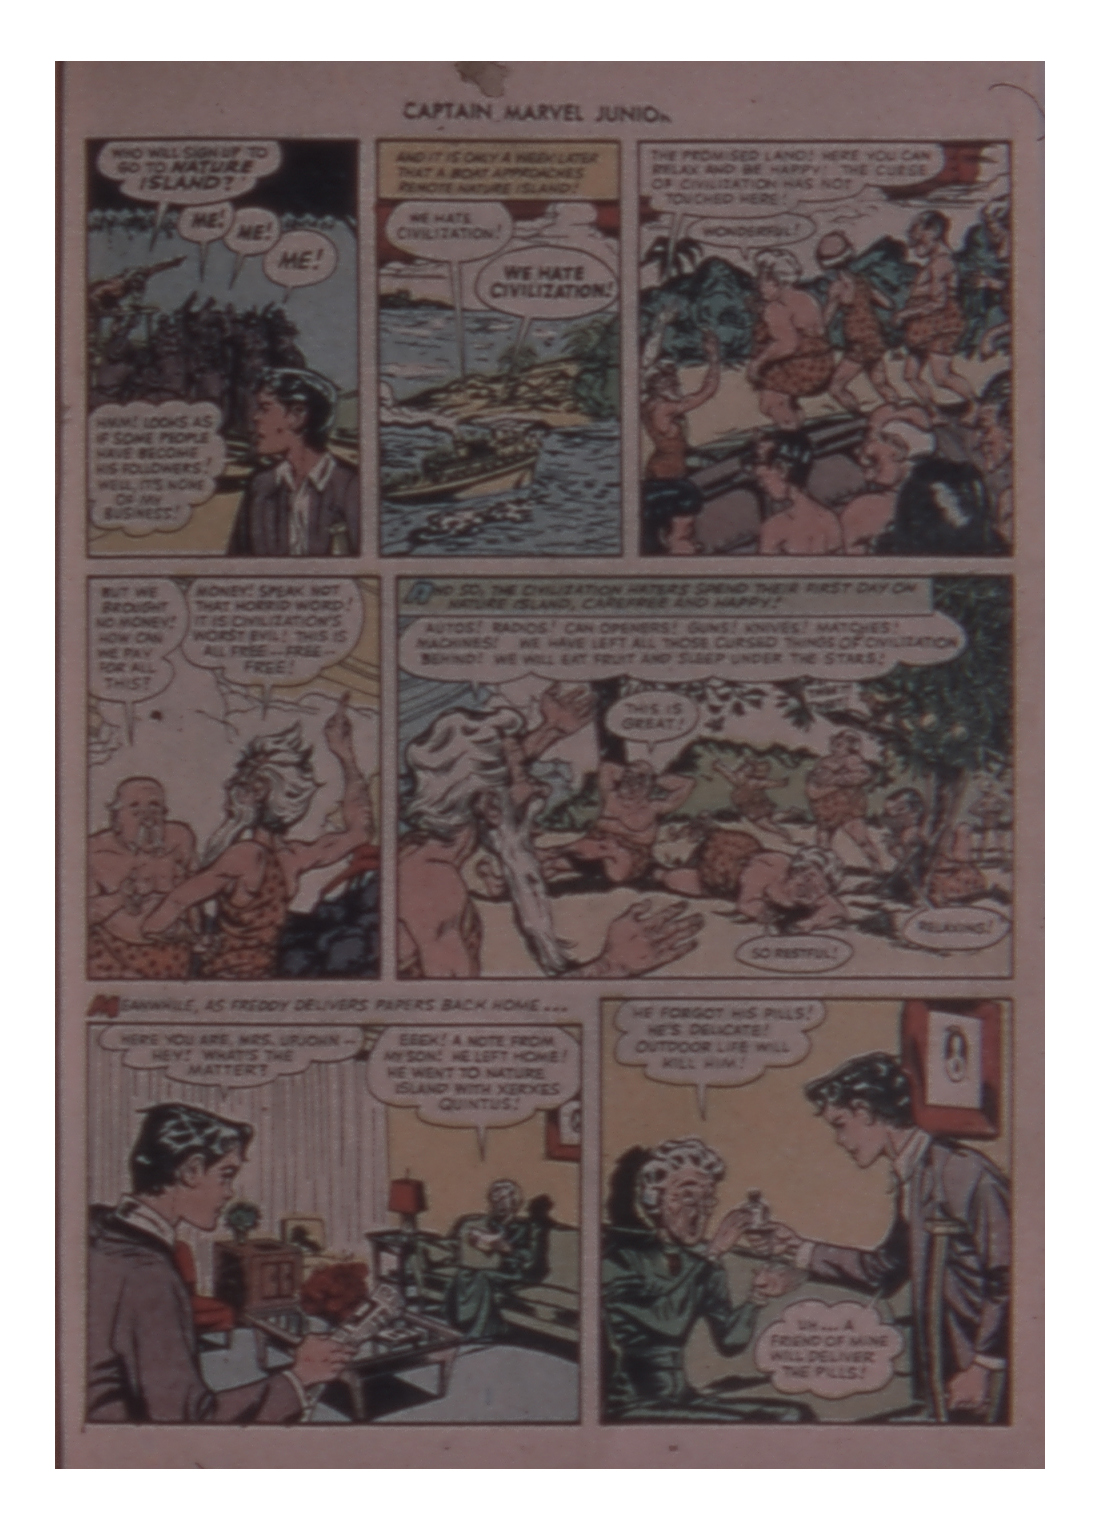 Read online Captain Marvel, Jr. comic -  Issue #74 - 27